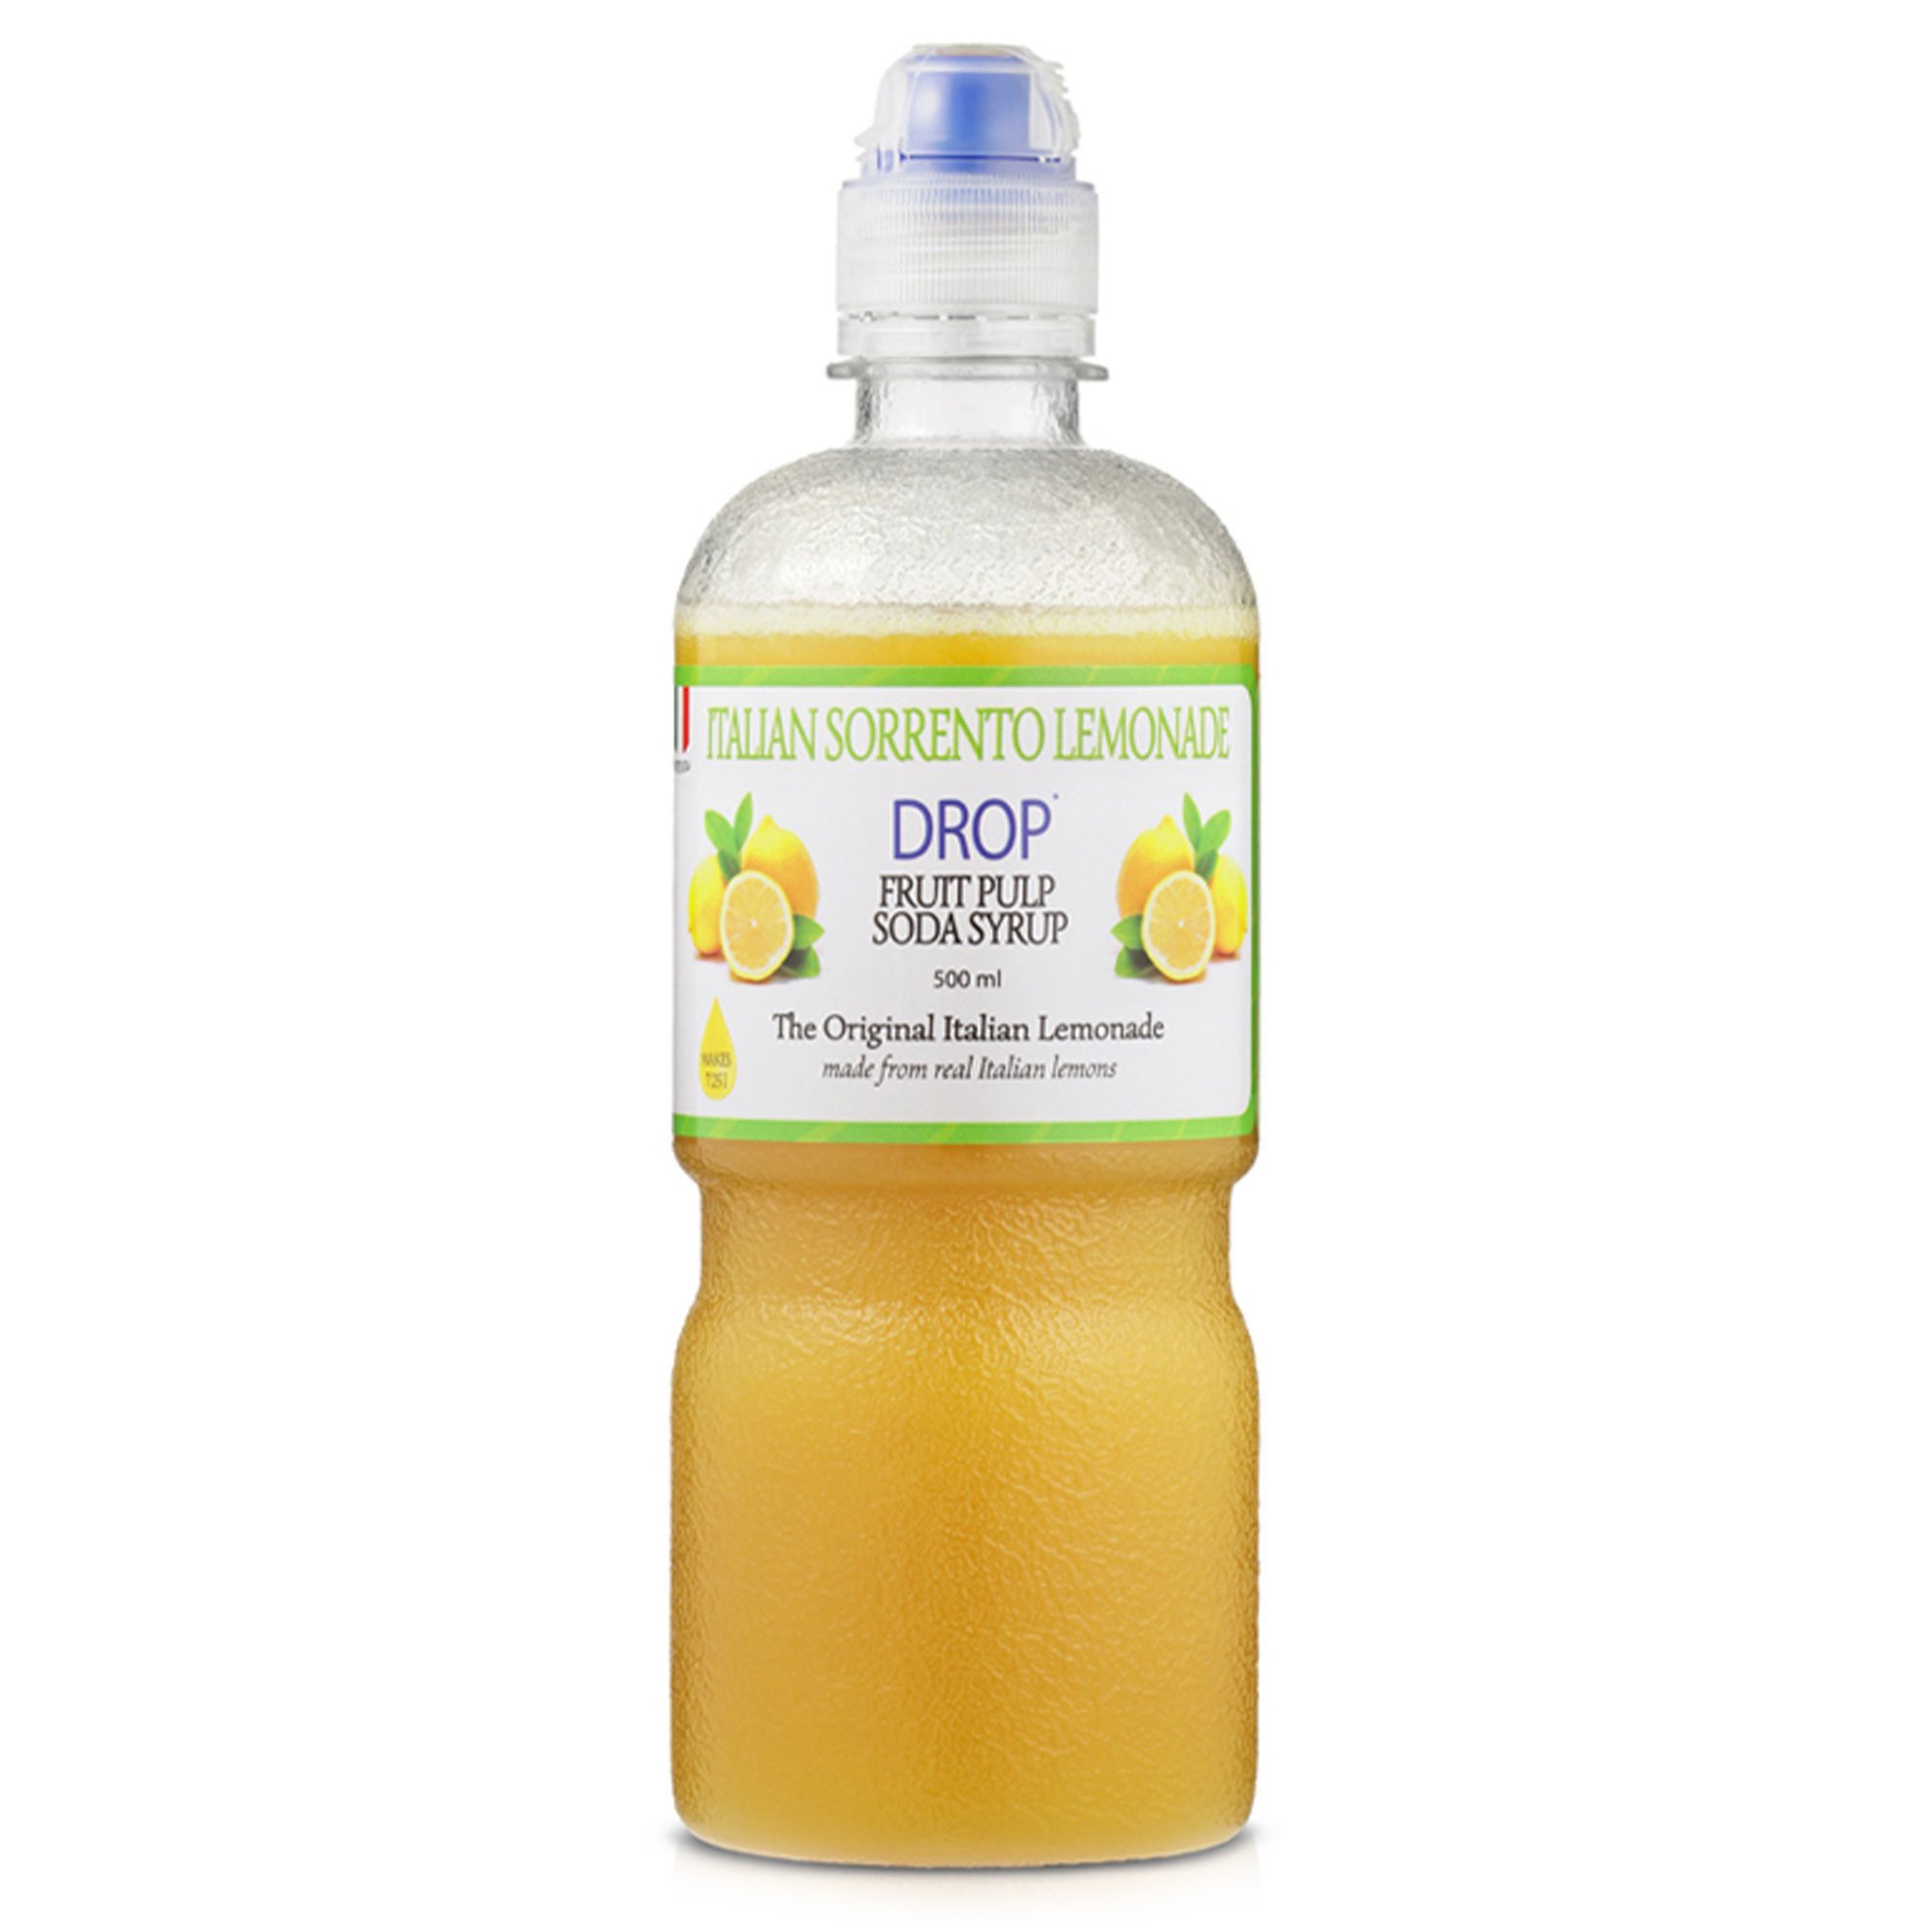 Bubliq Smakskonsentrat Italian Sorrento Lemonade 500 ml